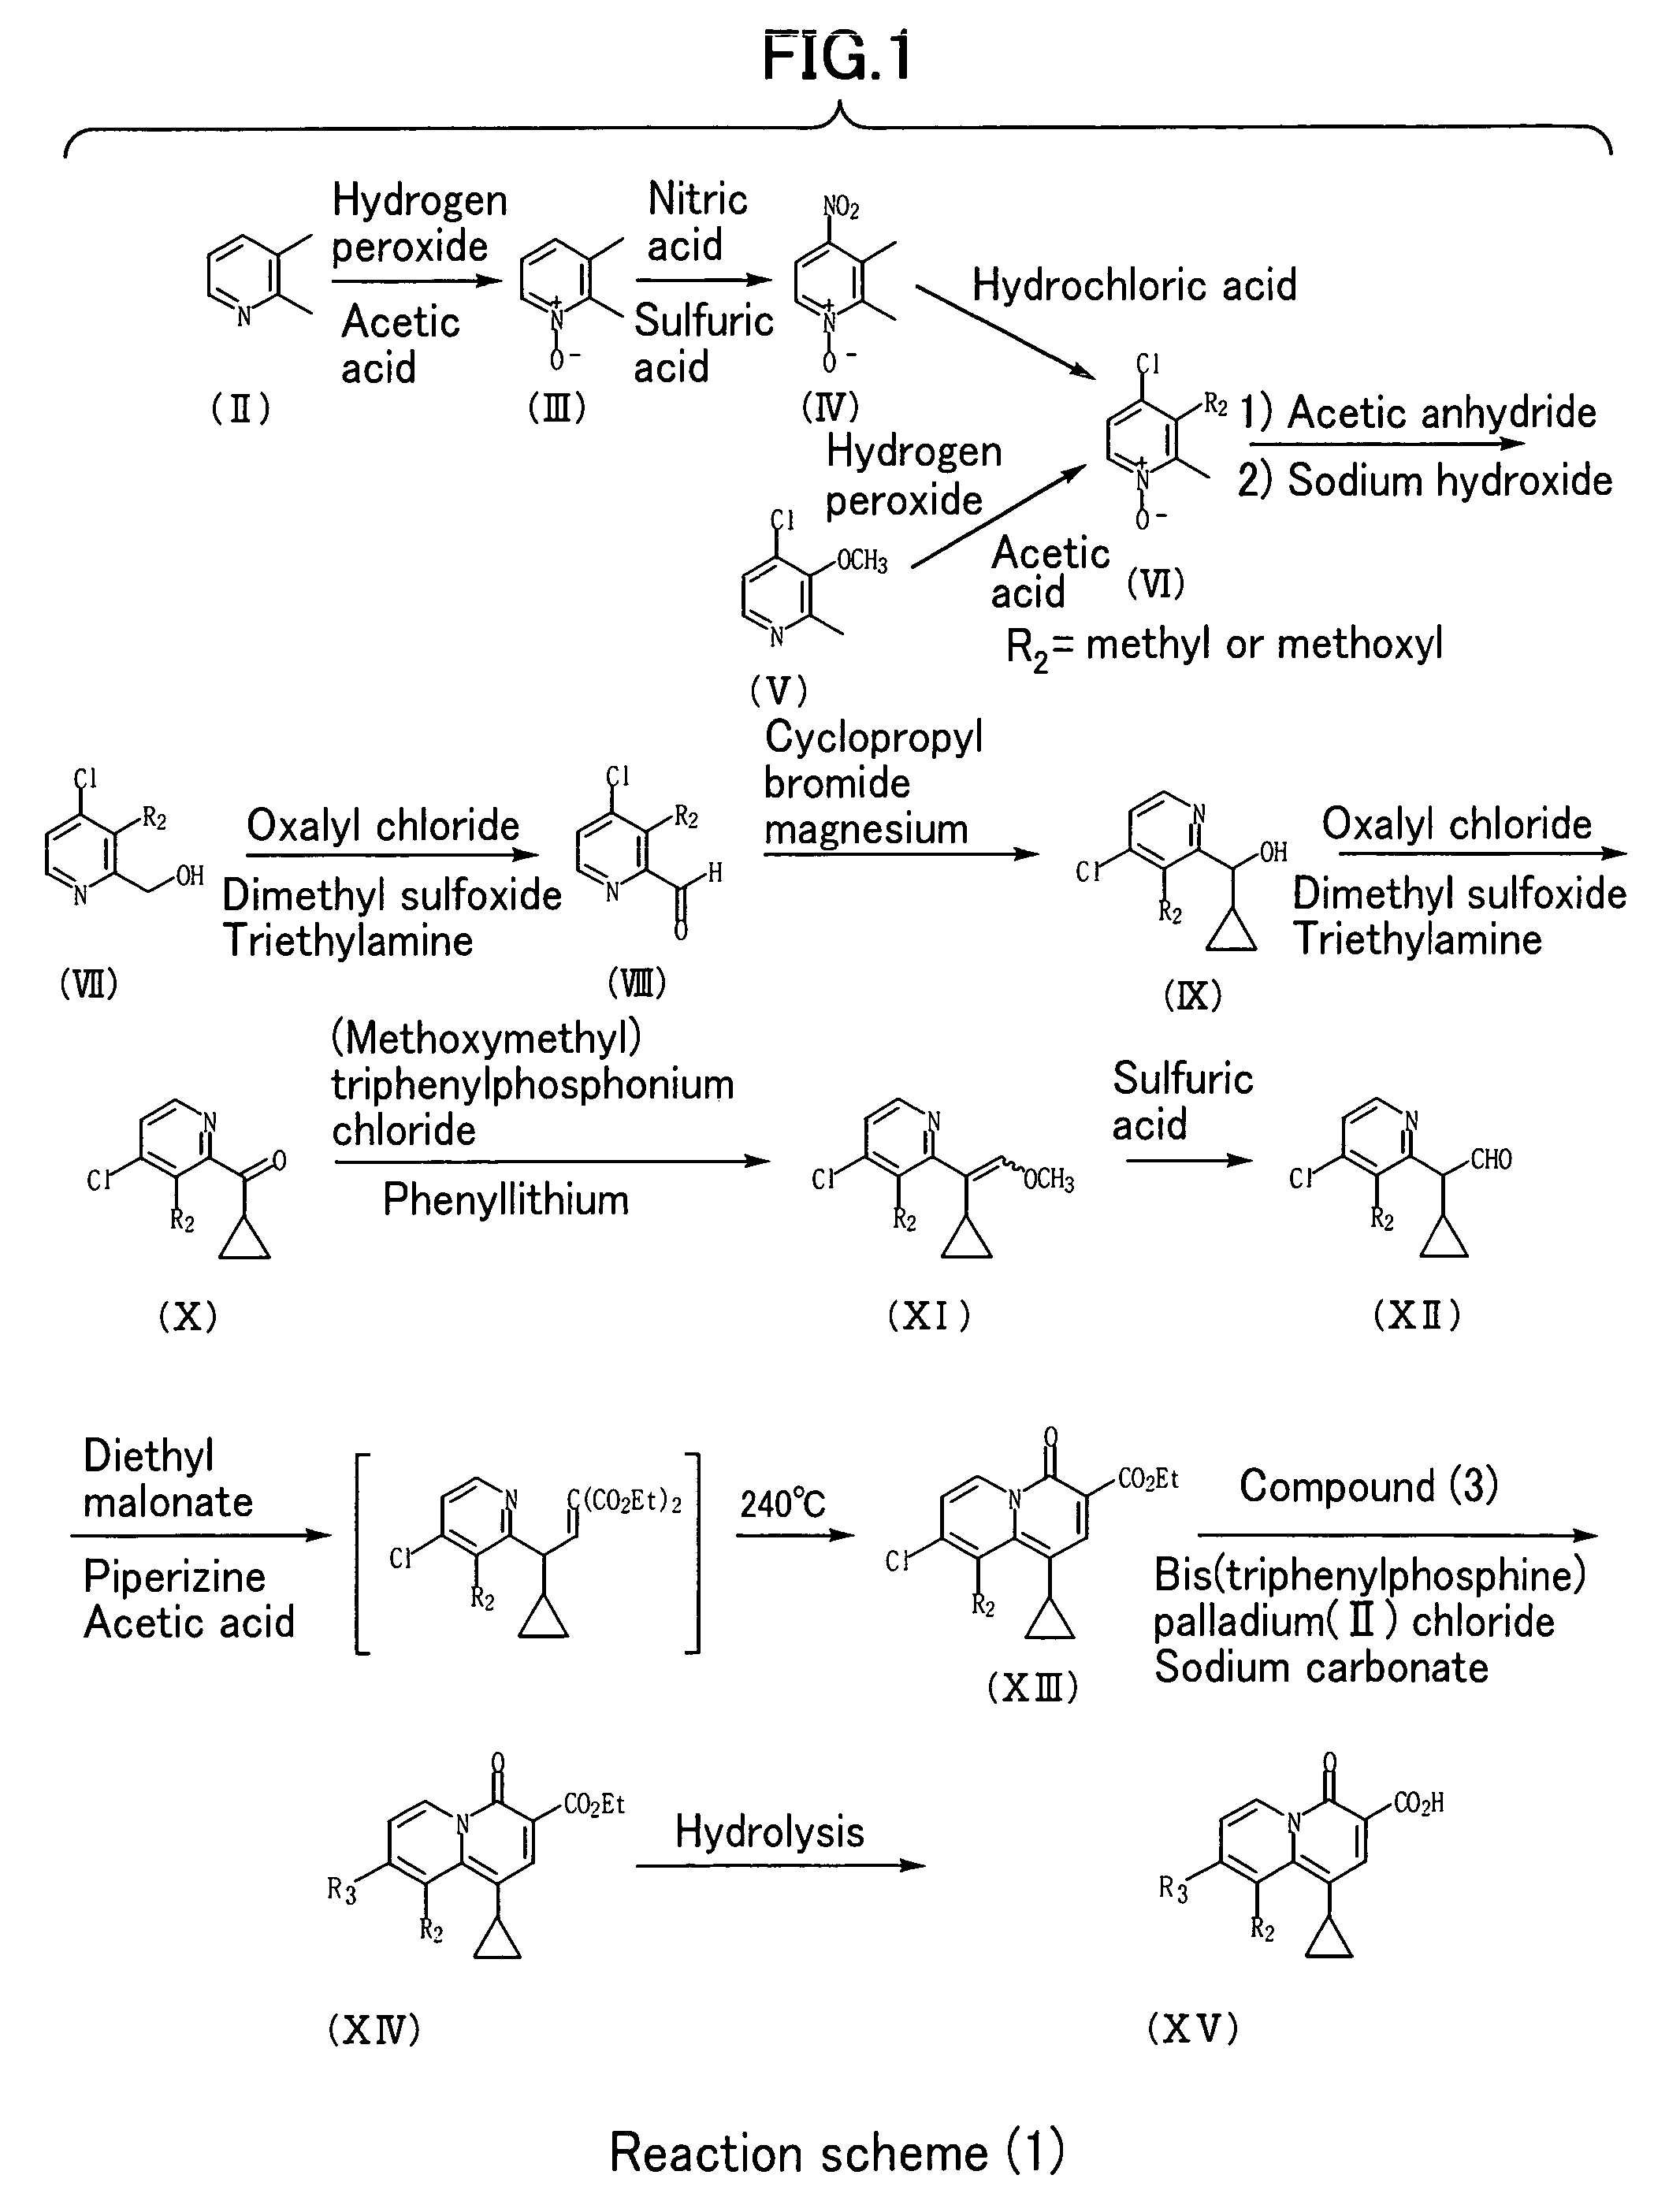 4-oxoquinolizine antibacterial agent having 2-pyridone skeleton as partial structure